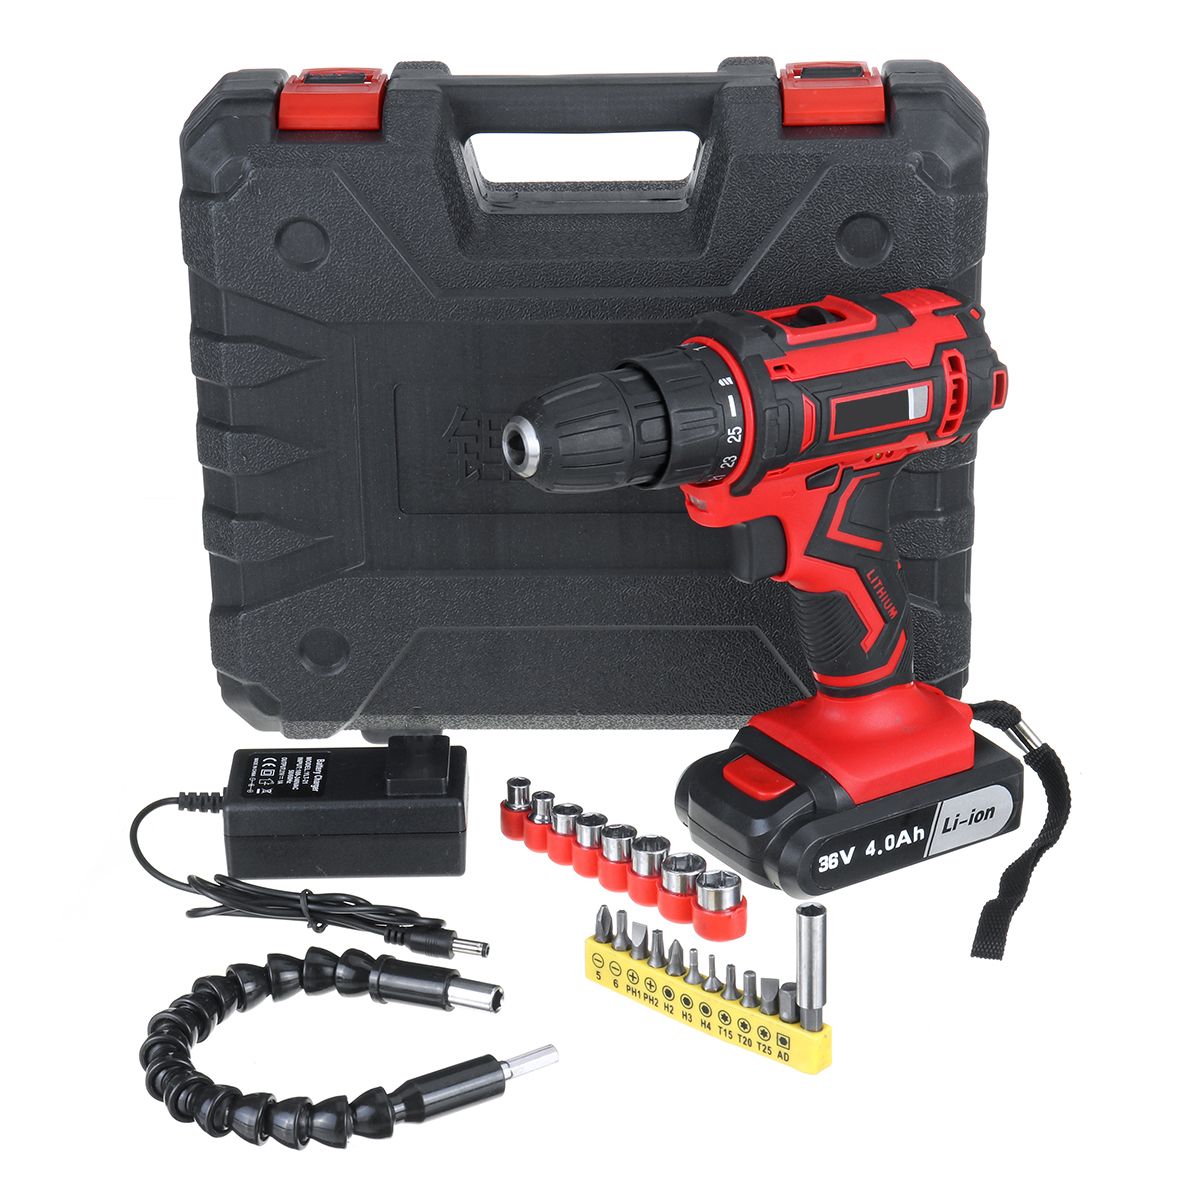 36V-Cordless-Electric-Impact-Drill-2-Speed-LED-Light-Power-Tool-Screw-Driver-Kit-1618175